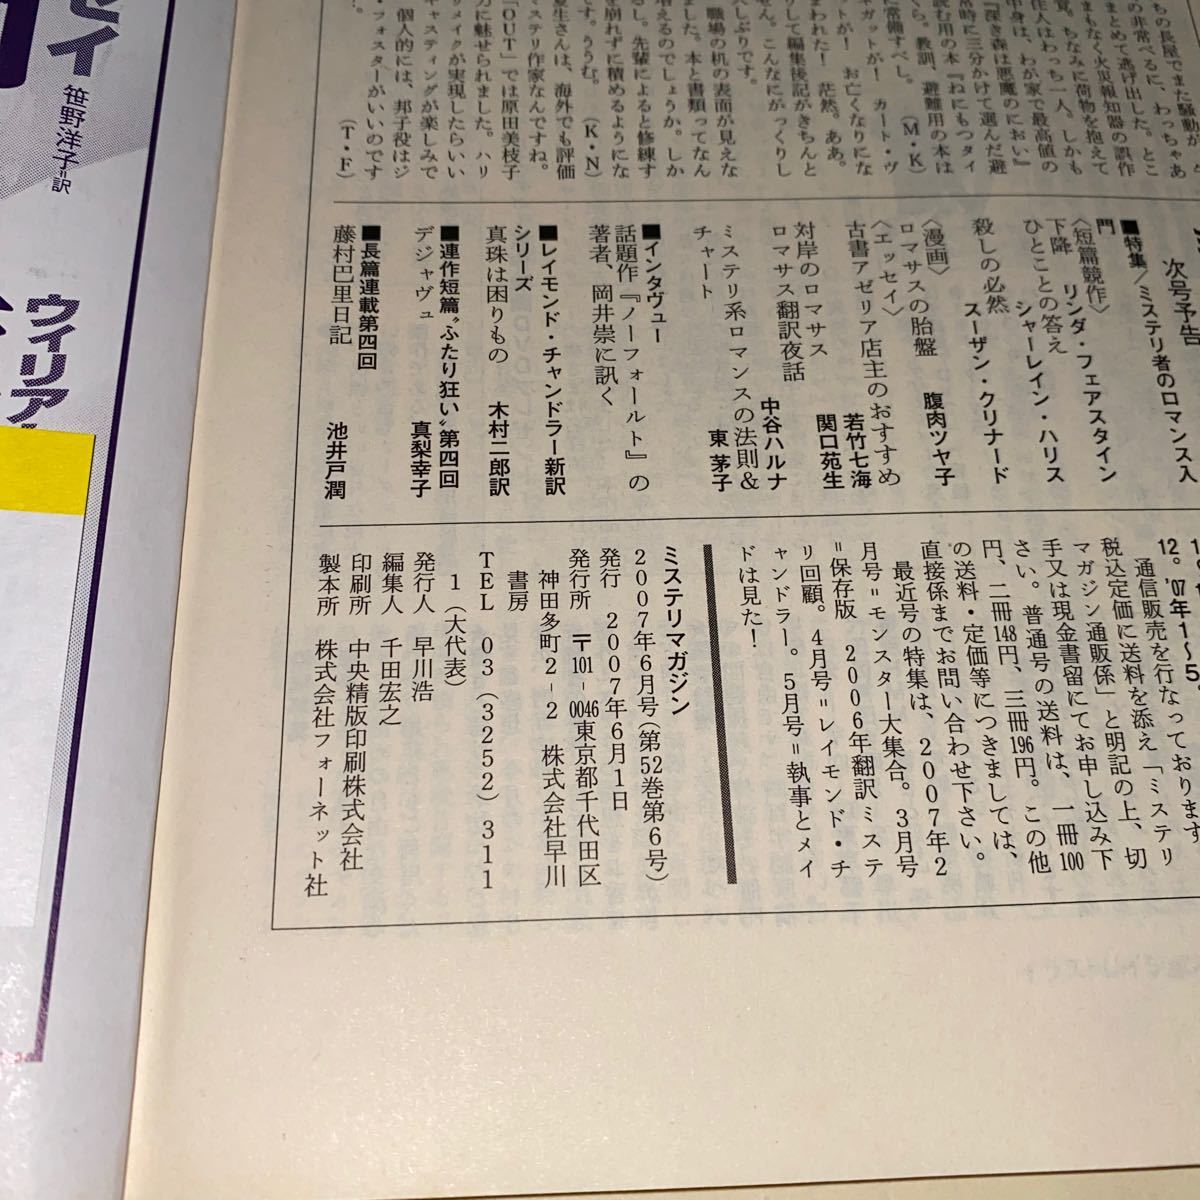 4 mistake teli magazine 2007 year 6 number No.616 Murakami Haruki. life and game river .. against .. island regular × small hawk confidence light . well .